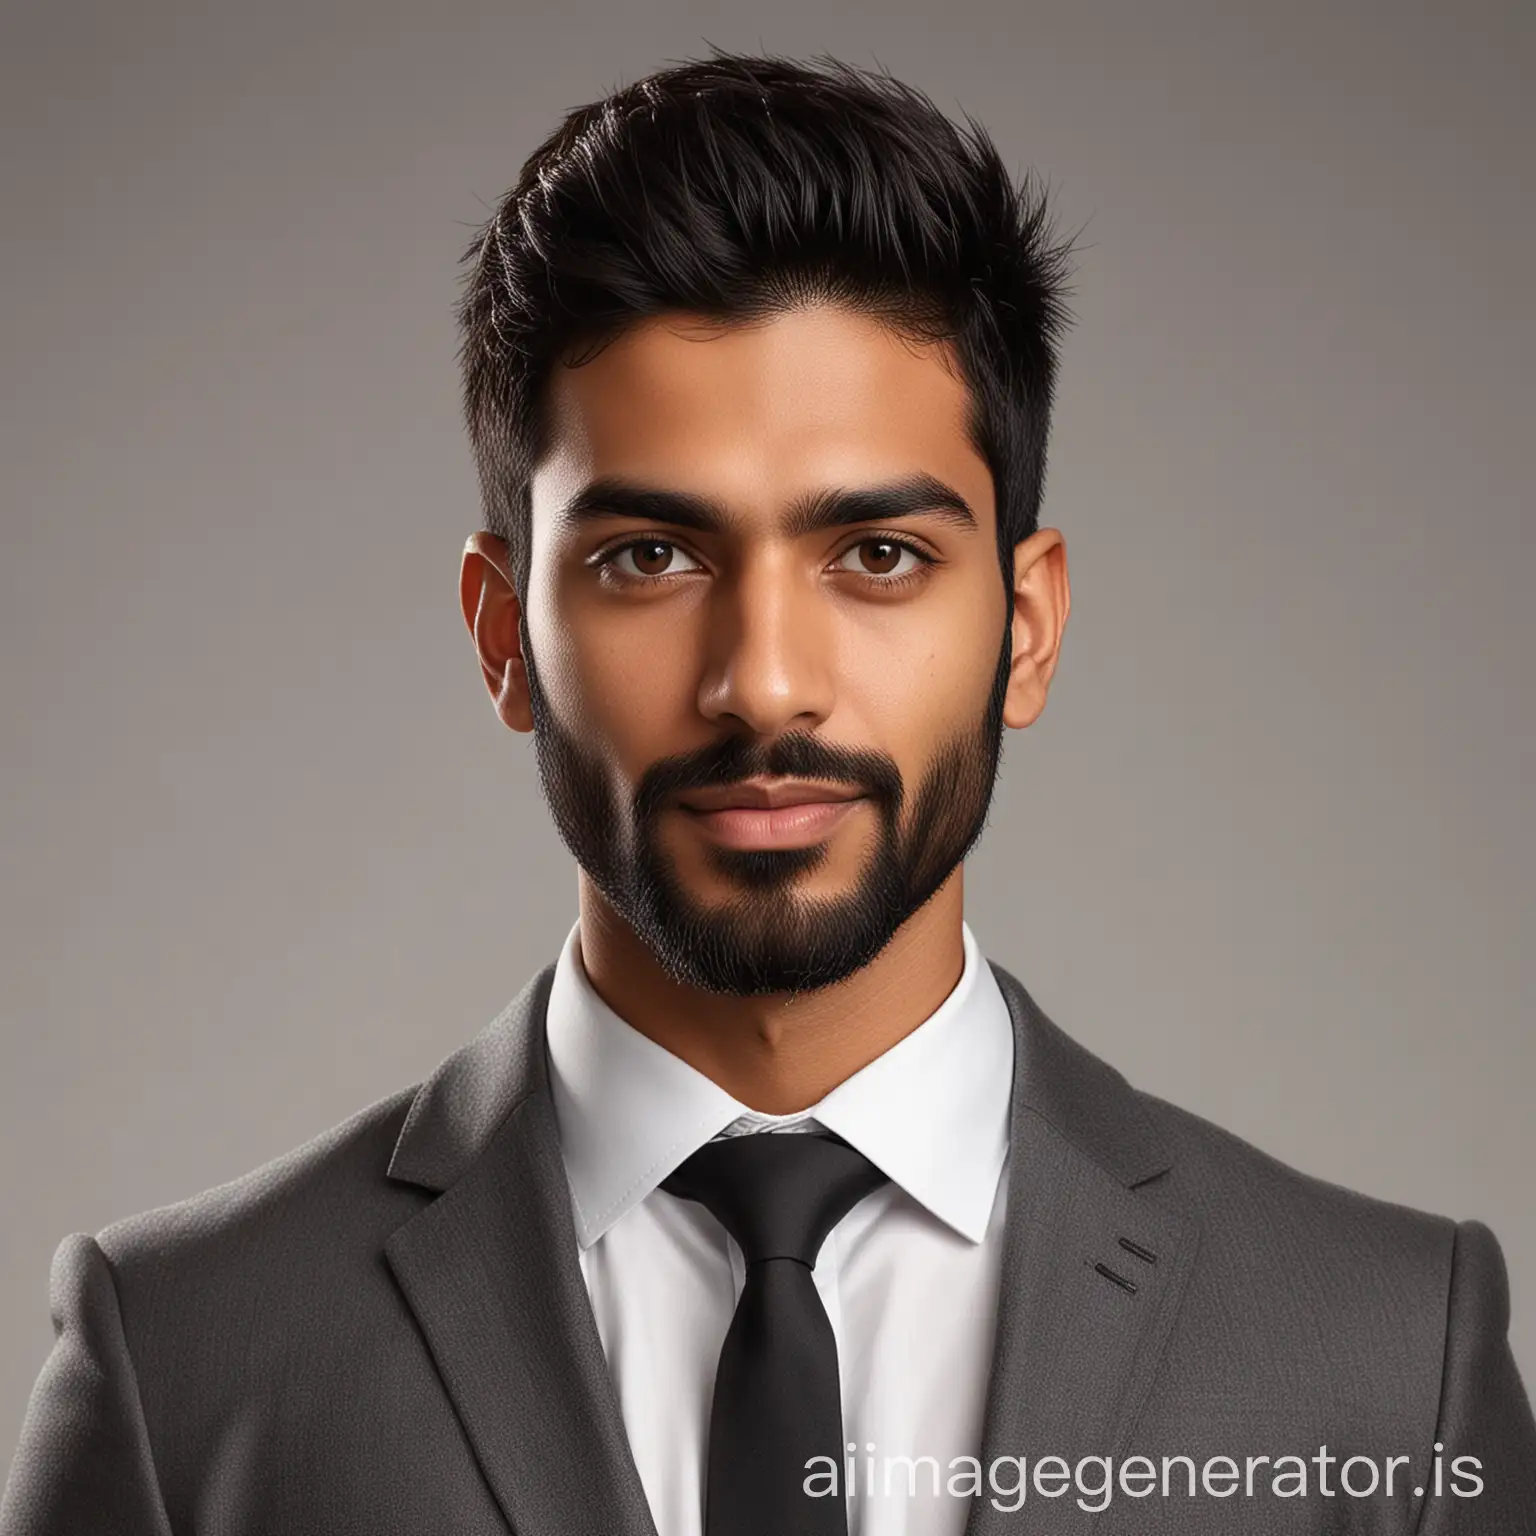 Professional-Indian-Male-Portrait-in-Best-Suit-Hyper-Realistic